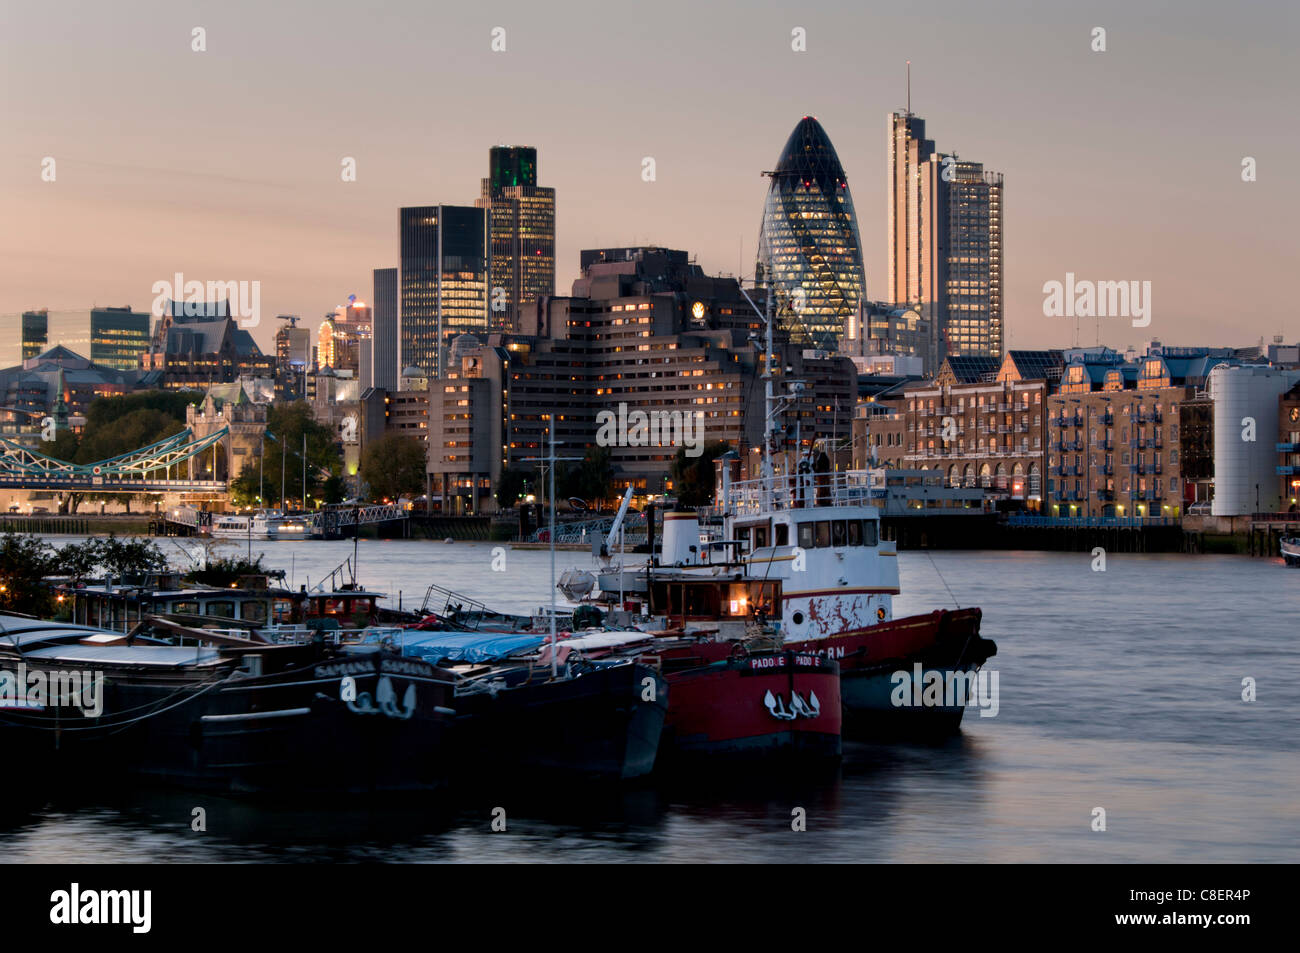 City skyline with Heron Tower at dusk, London, England, United Kingdom Stock Photo